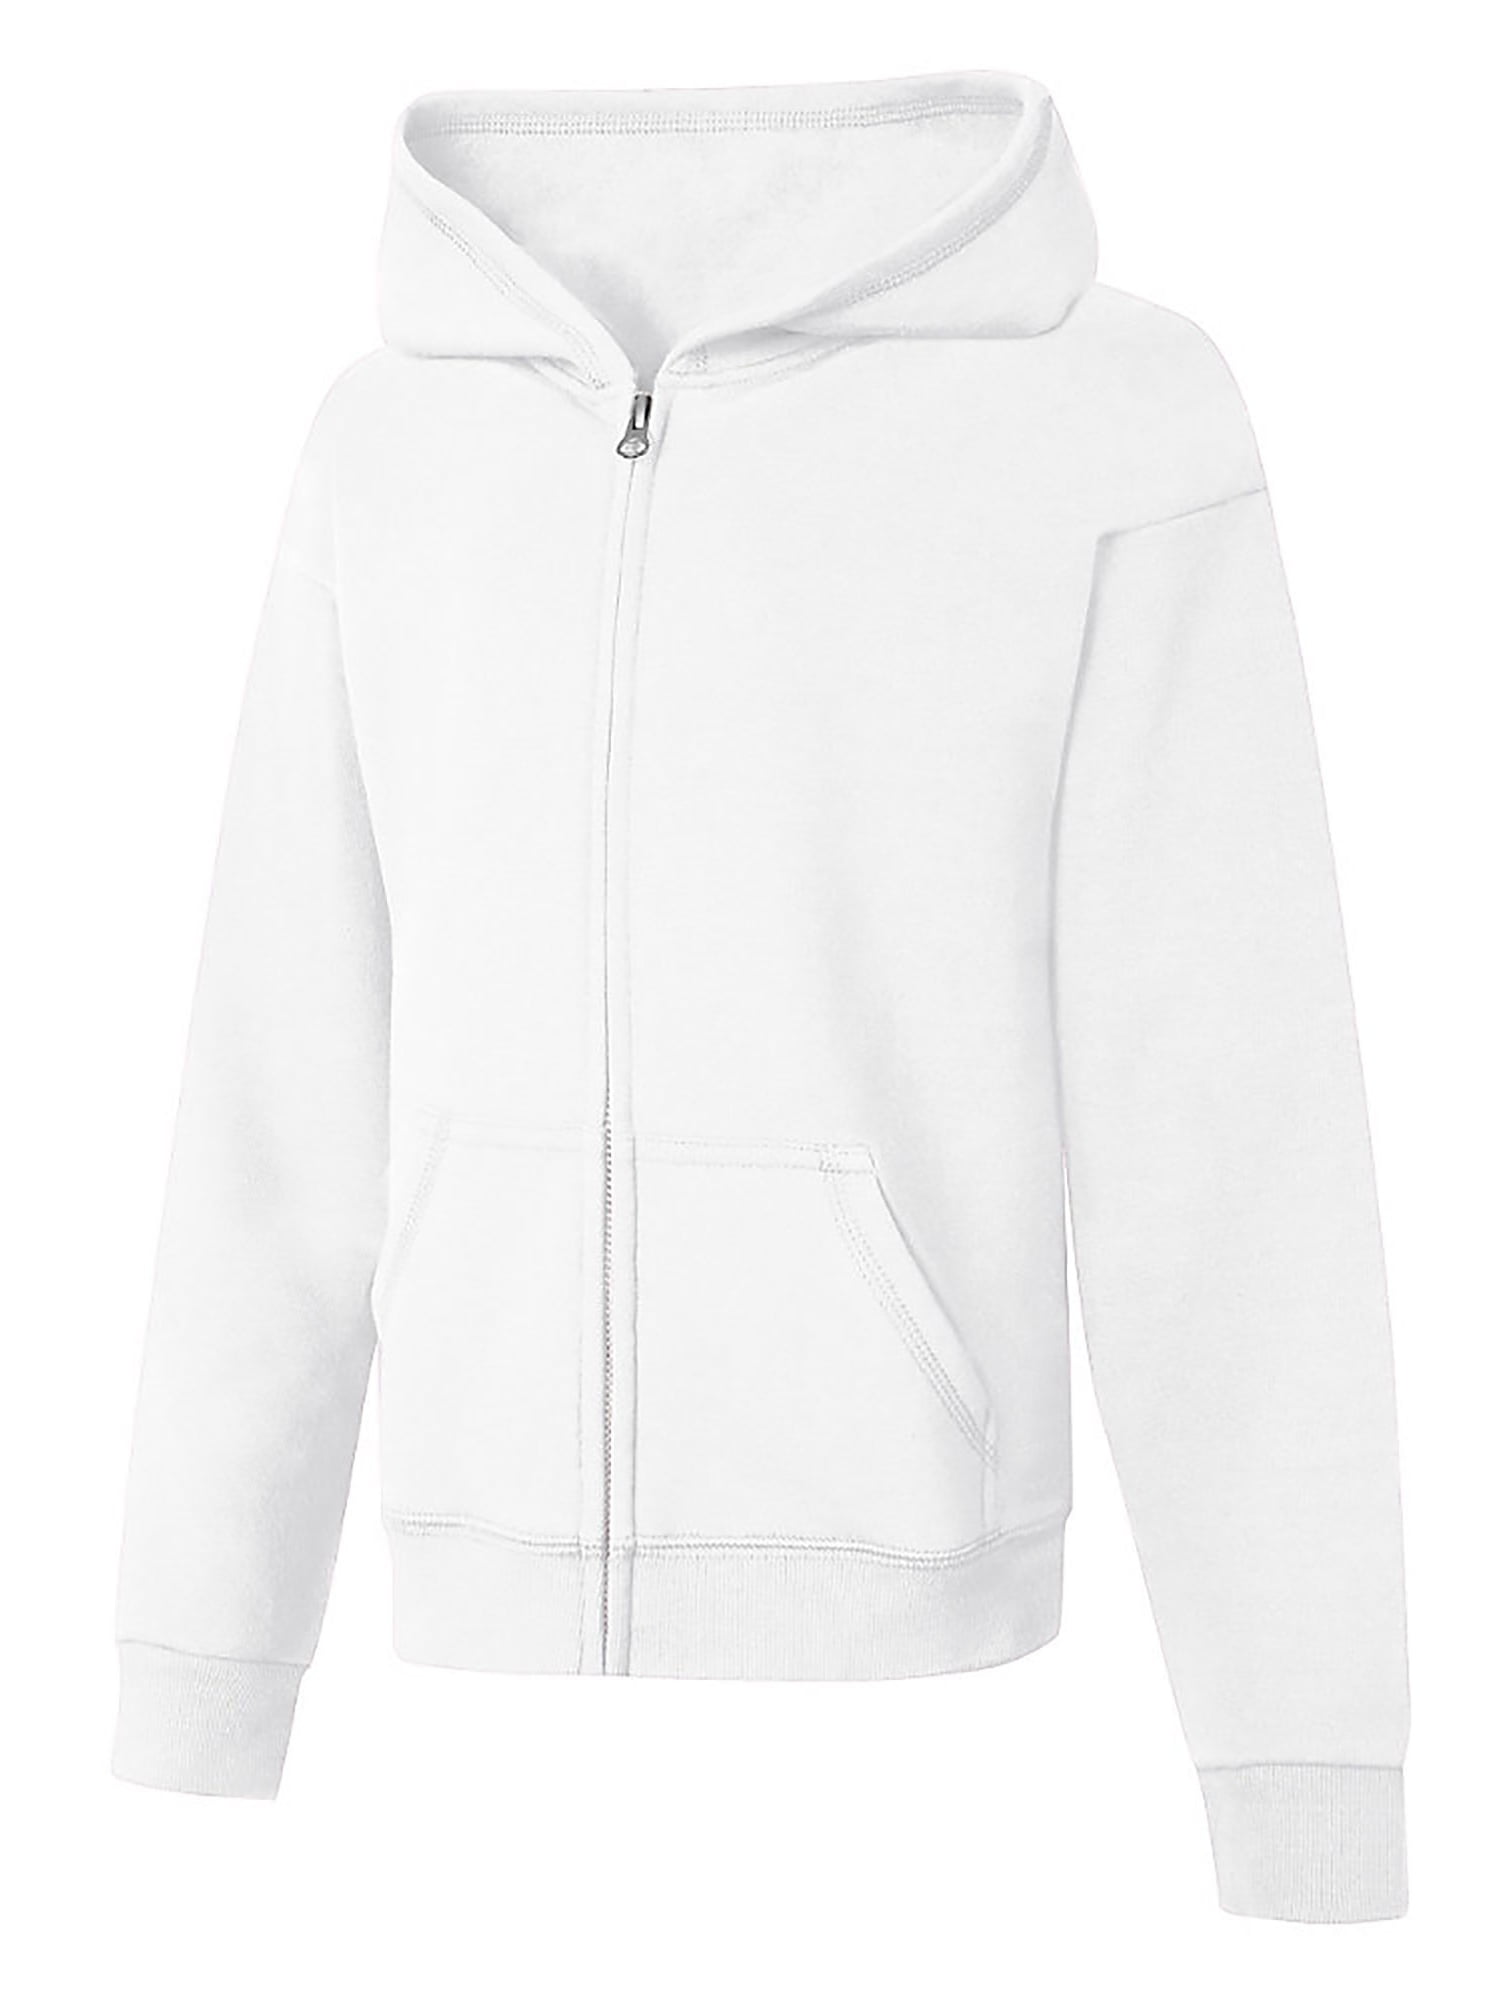 Hanes Girls' Full-Zip Hoodie Sweatshirt, Style OK270 - Walmart.com